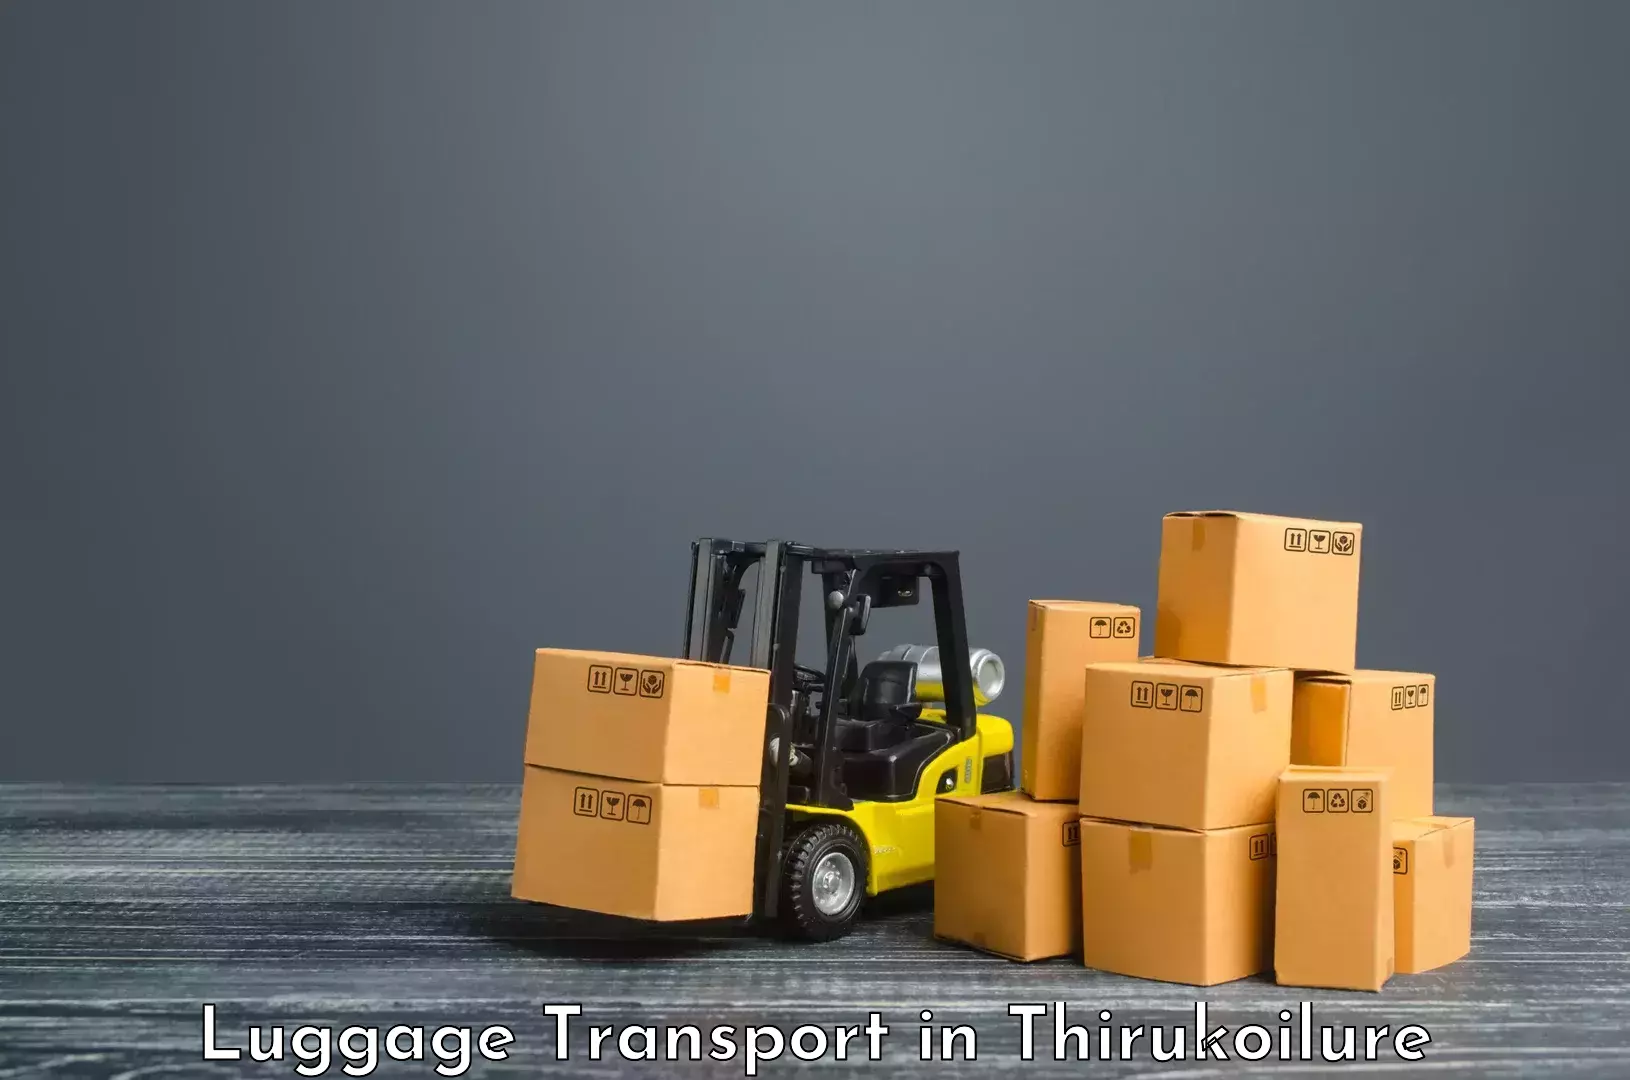 Multi-destination luggage transport in Thirukoilure